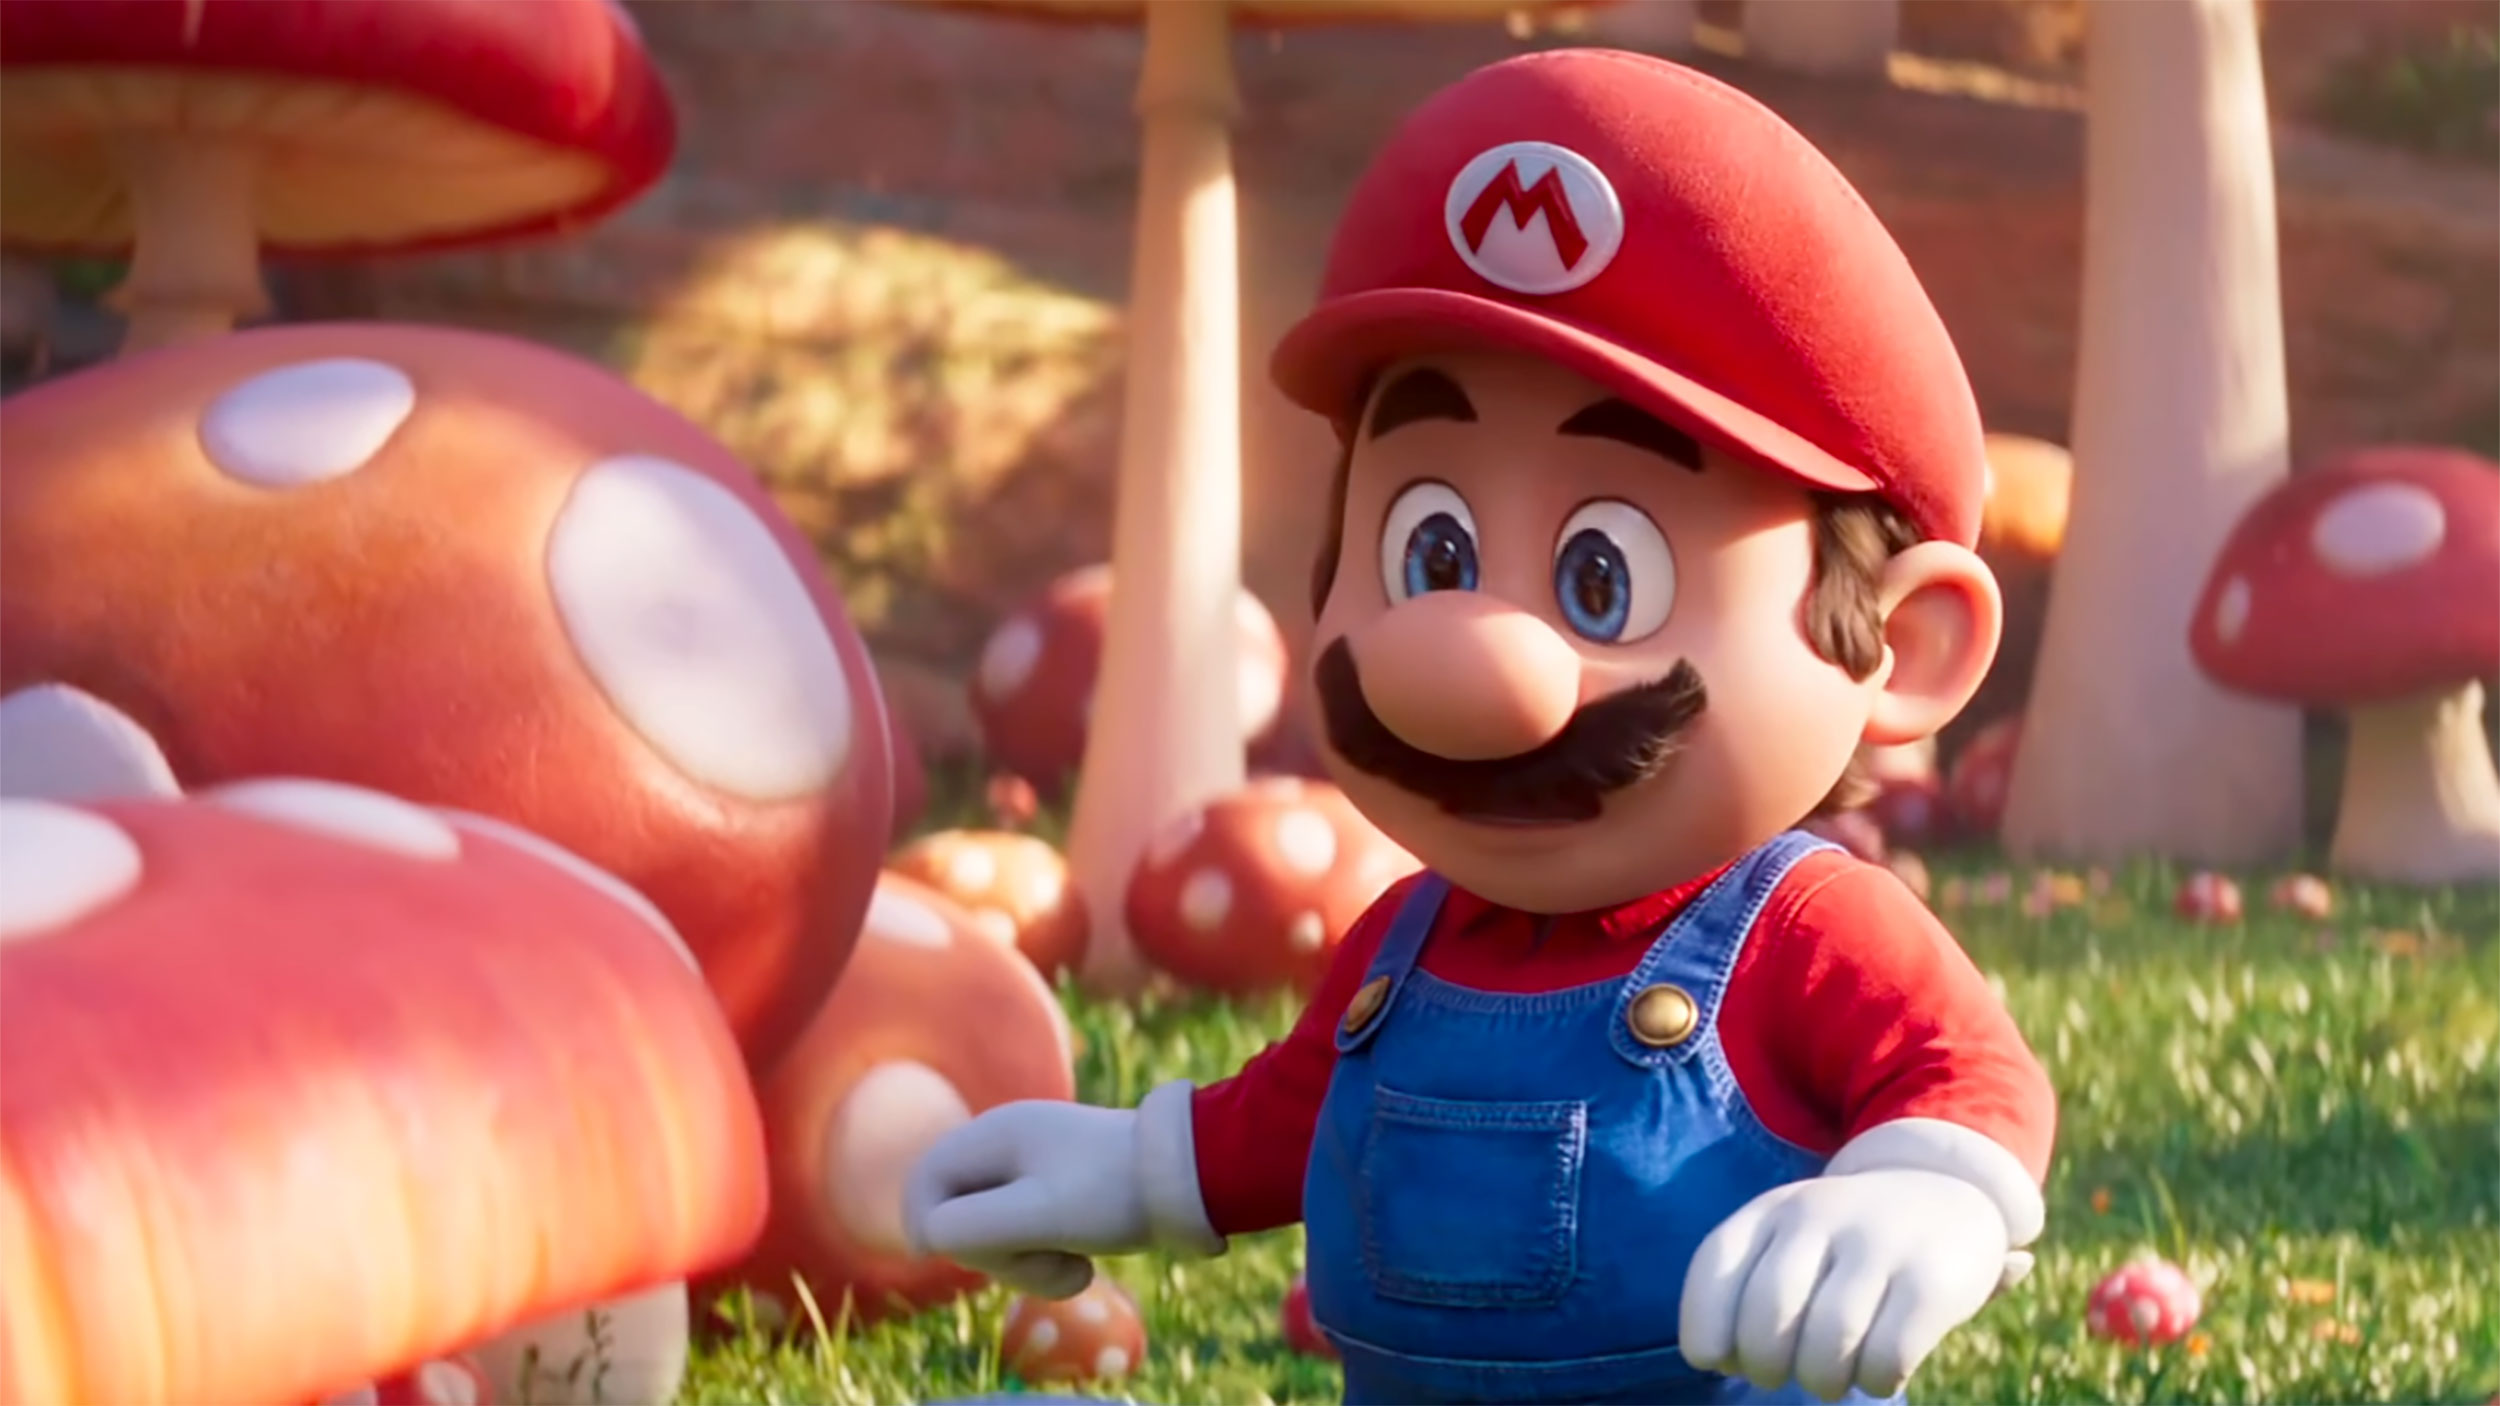 Mario, voiced by Chris Pratt, in "The Super Mario Bros. Movie." (Illumination via CNN)...